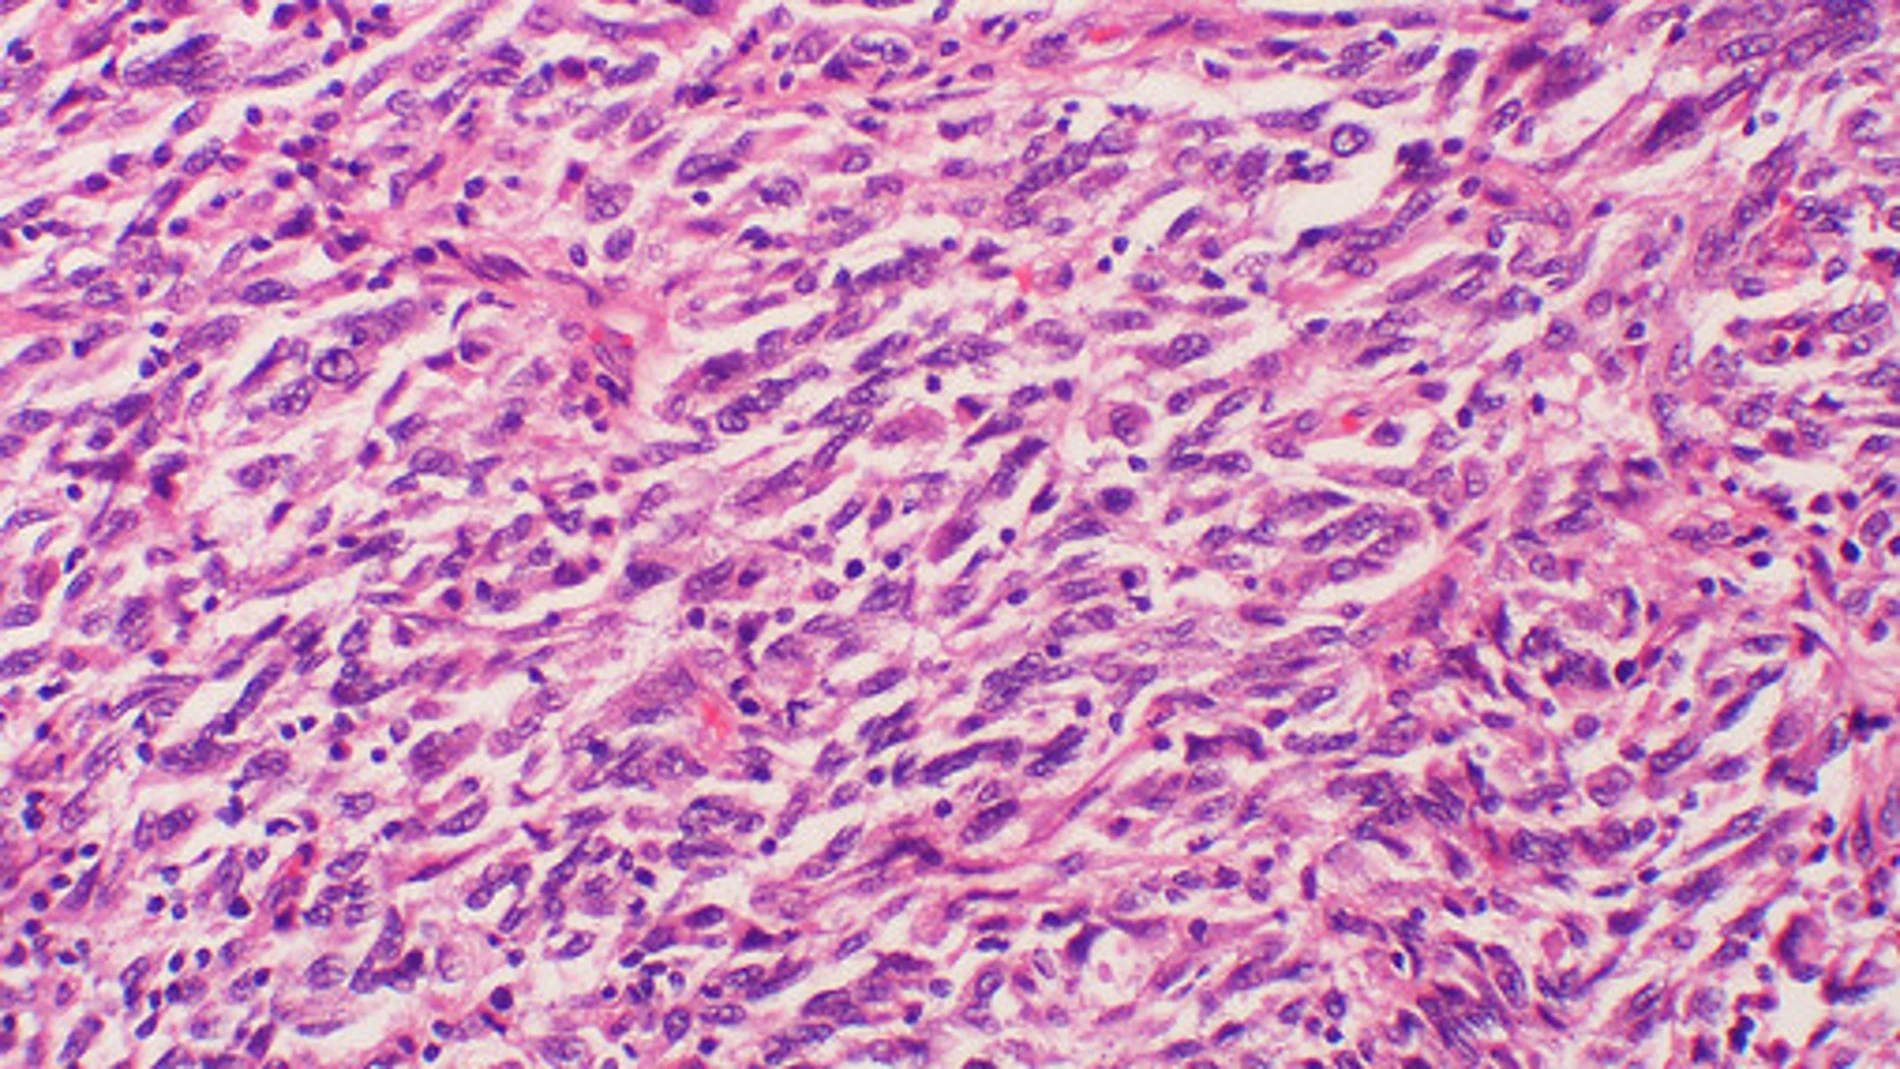 Muestra celular de melanoma con metástasis